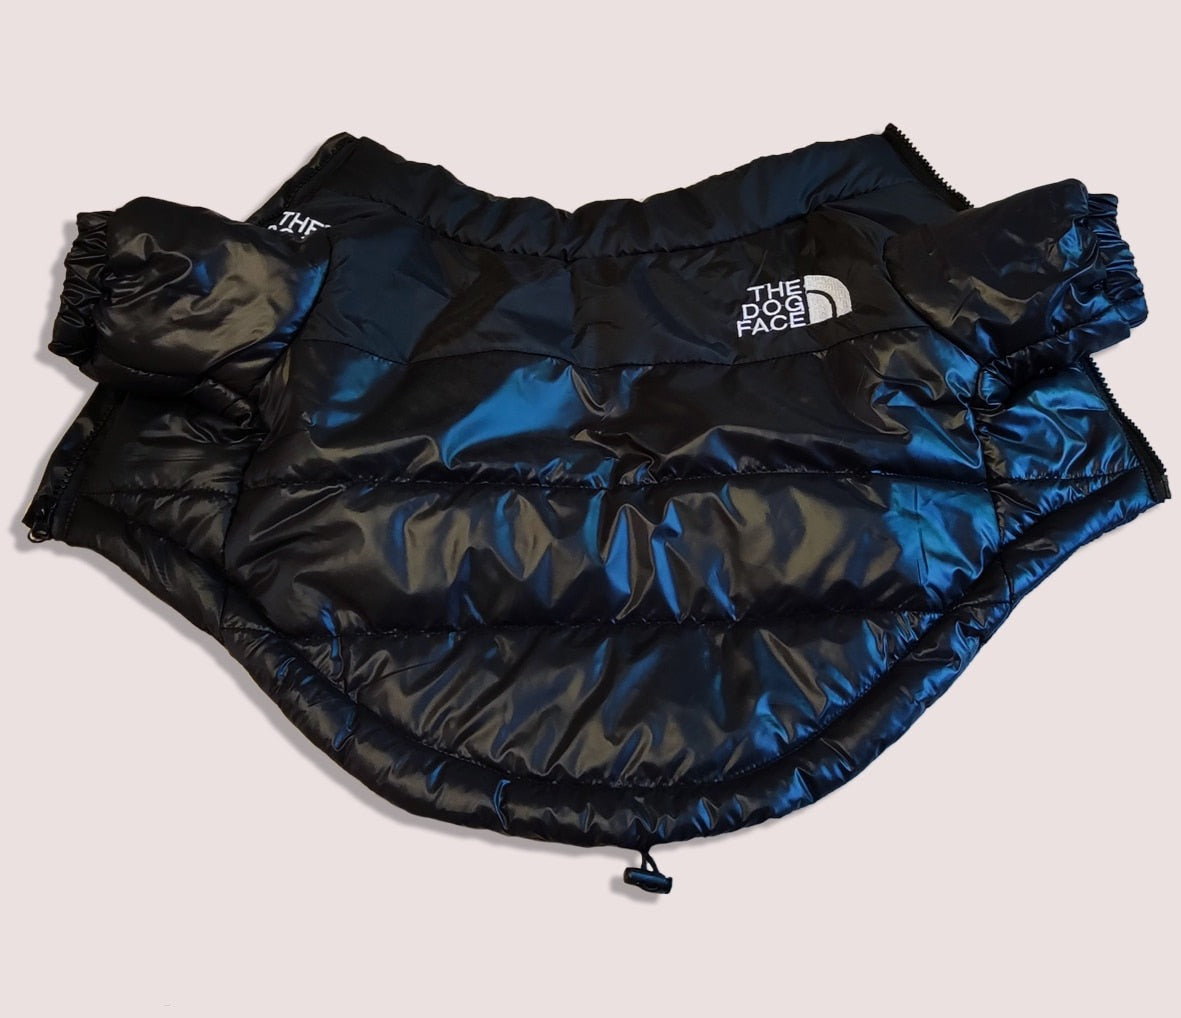 Windproof Reflective Dog Jacket - Made of Stars